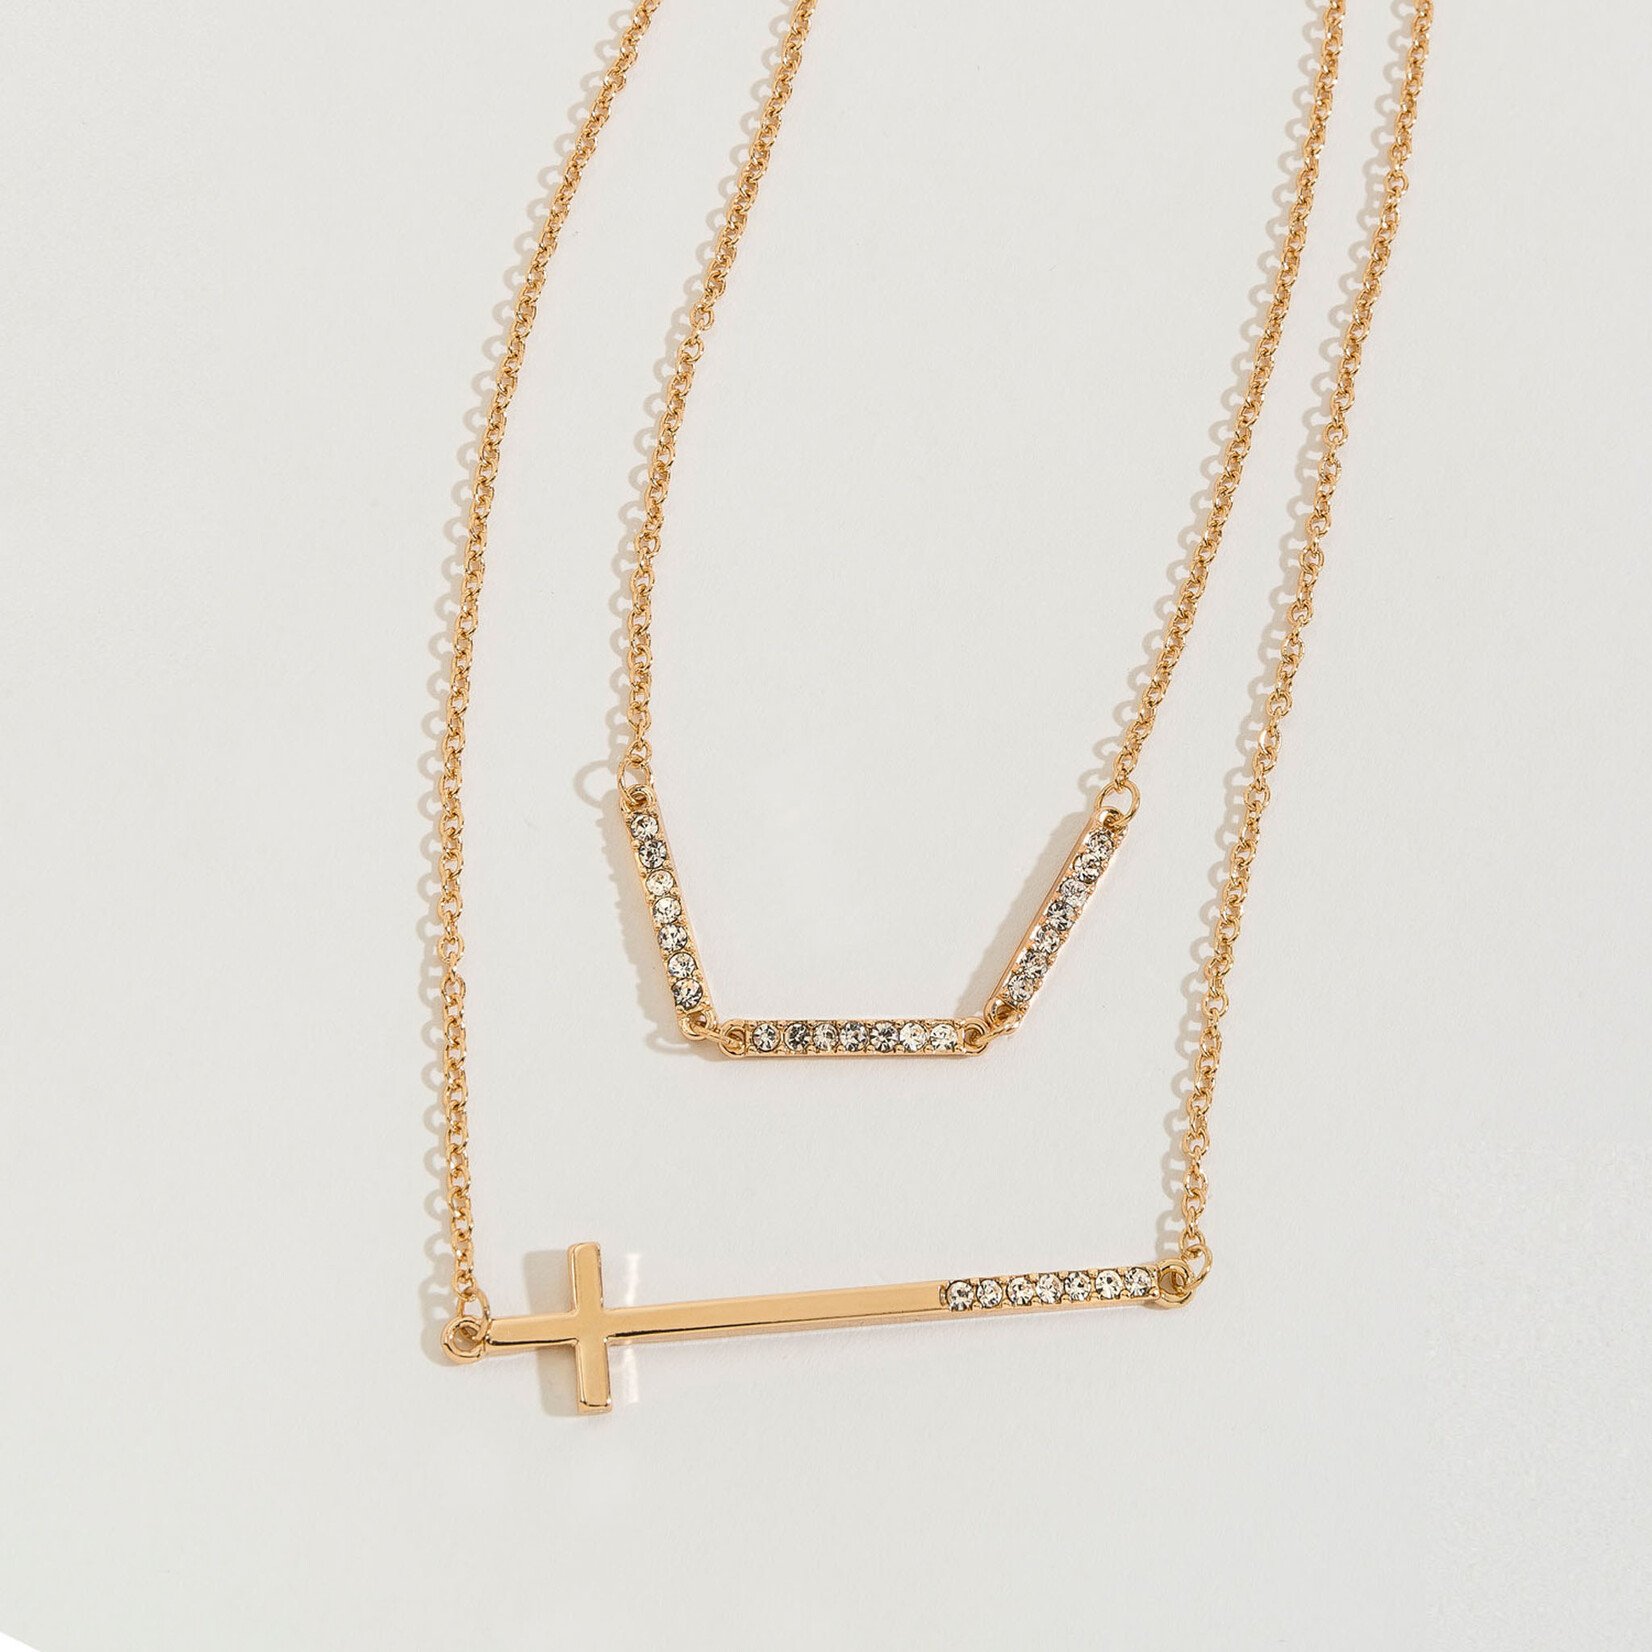 Howards Sideways Cross and Gemstone Layered Necklace